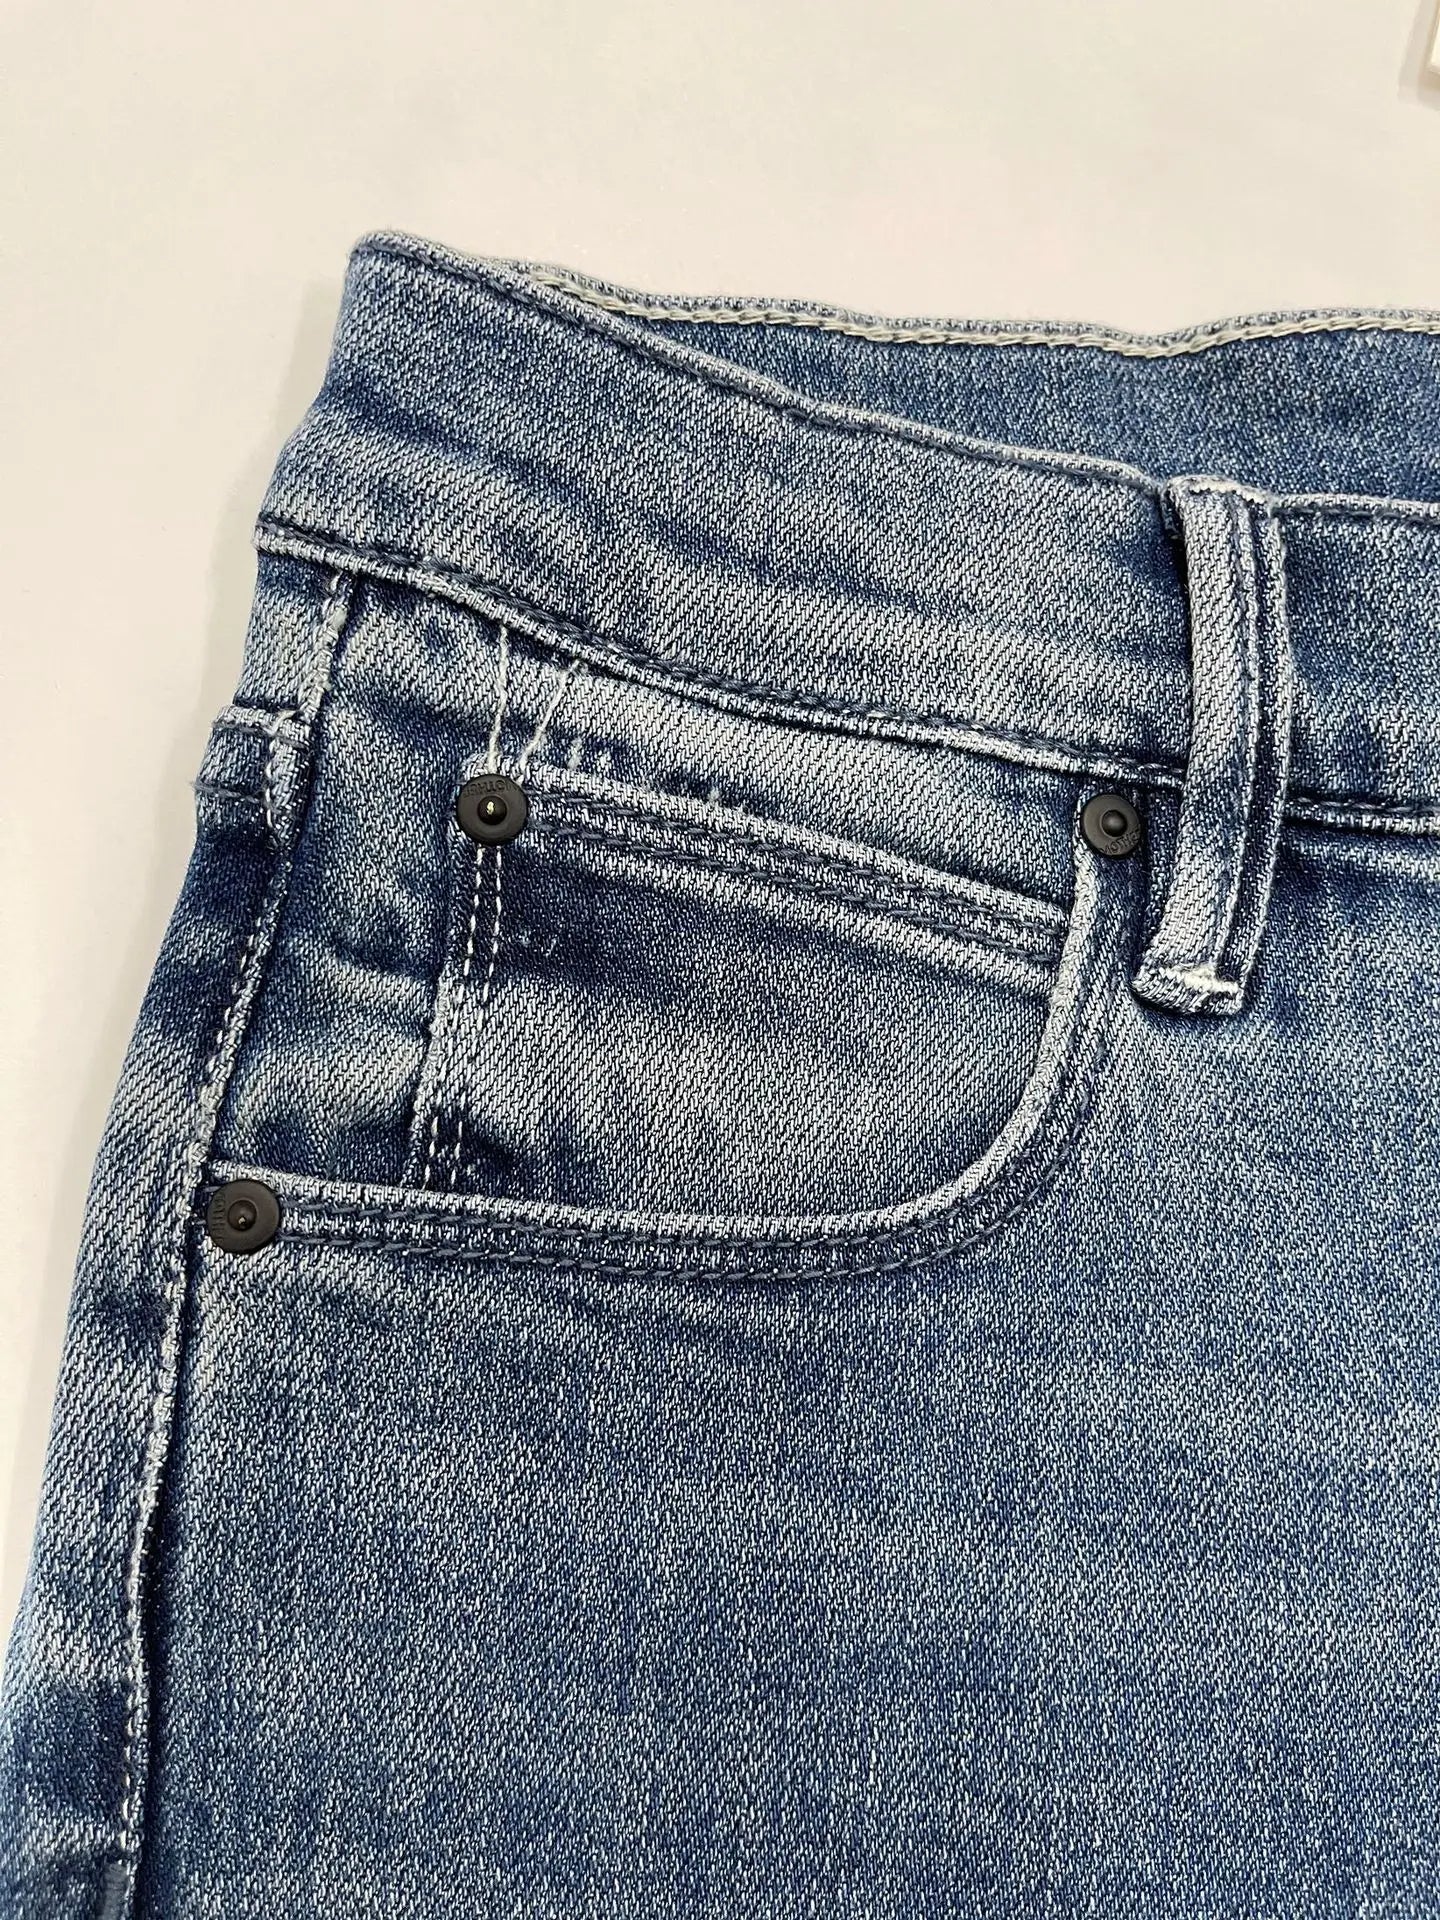 Women high waist slim jeans fashion casual denim ankle-length pants